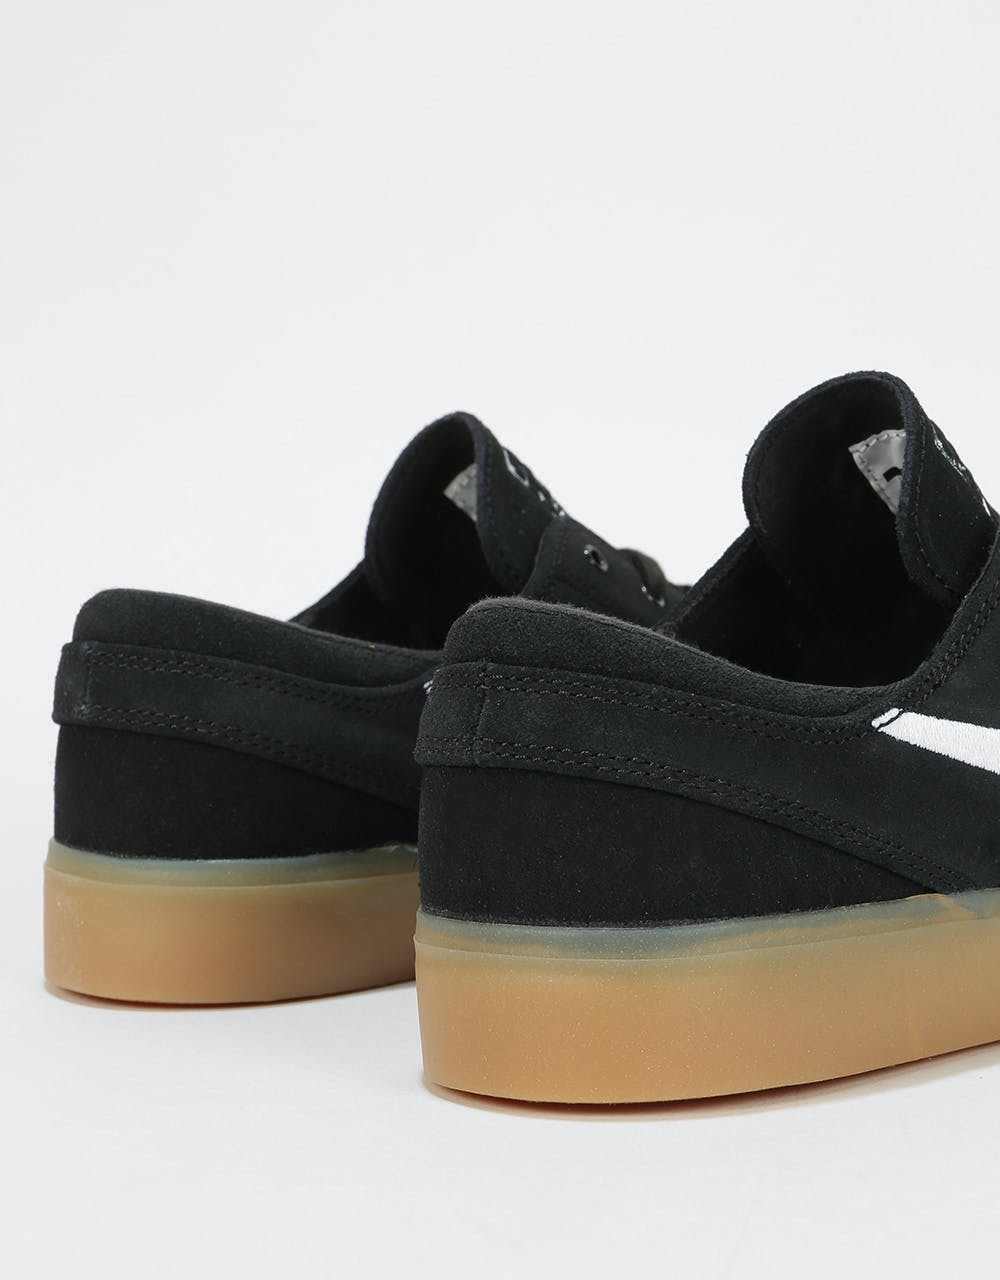 Nike SB Zoom Janoski RM Skate Shoes - Black/White-Gum Light Brown